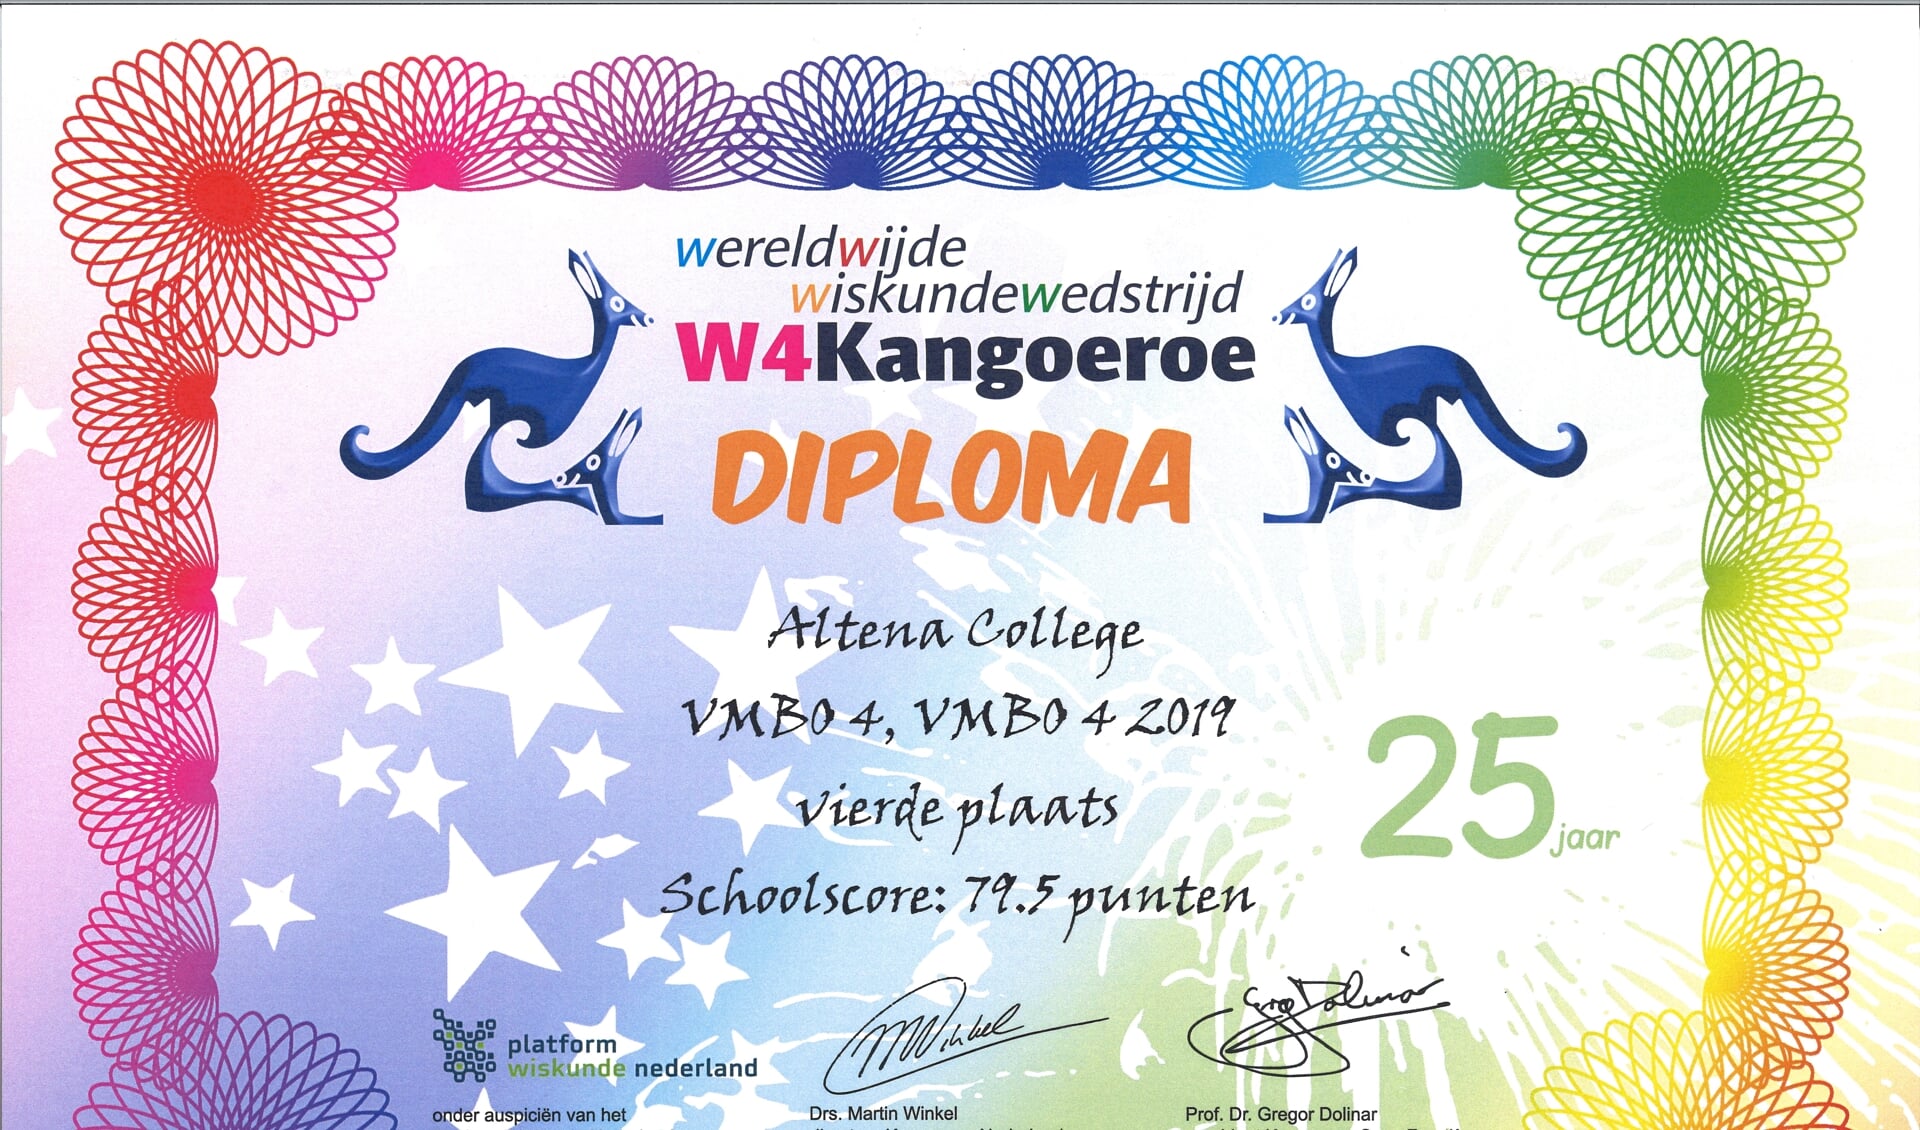 Diploma W4 Kangoeroe wiskunde wedstrijd